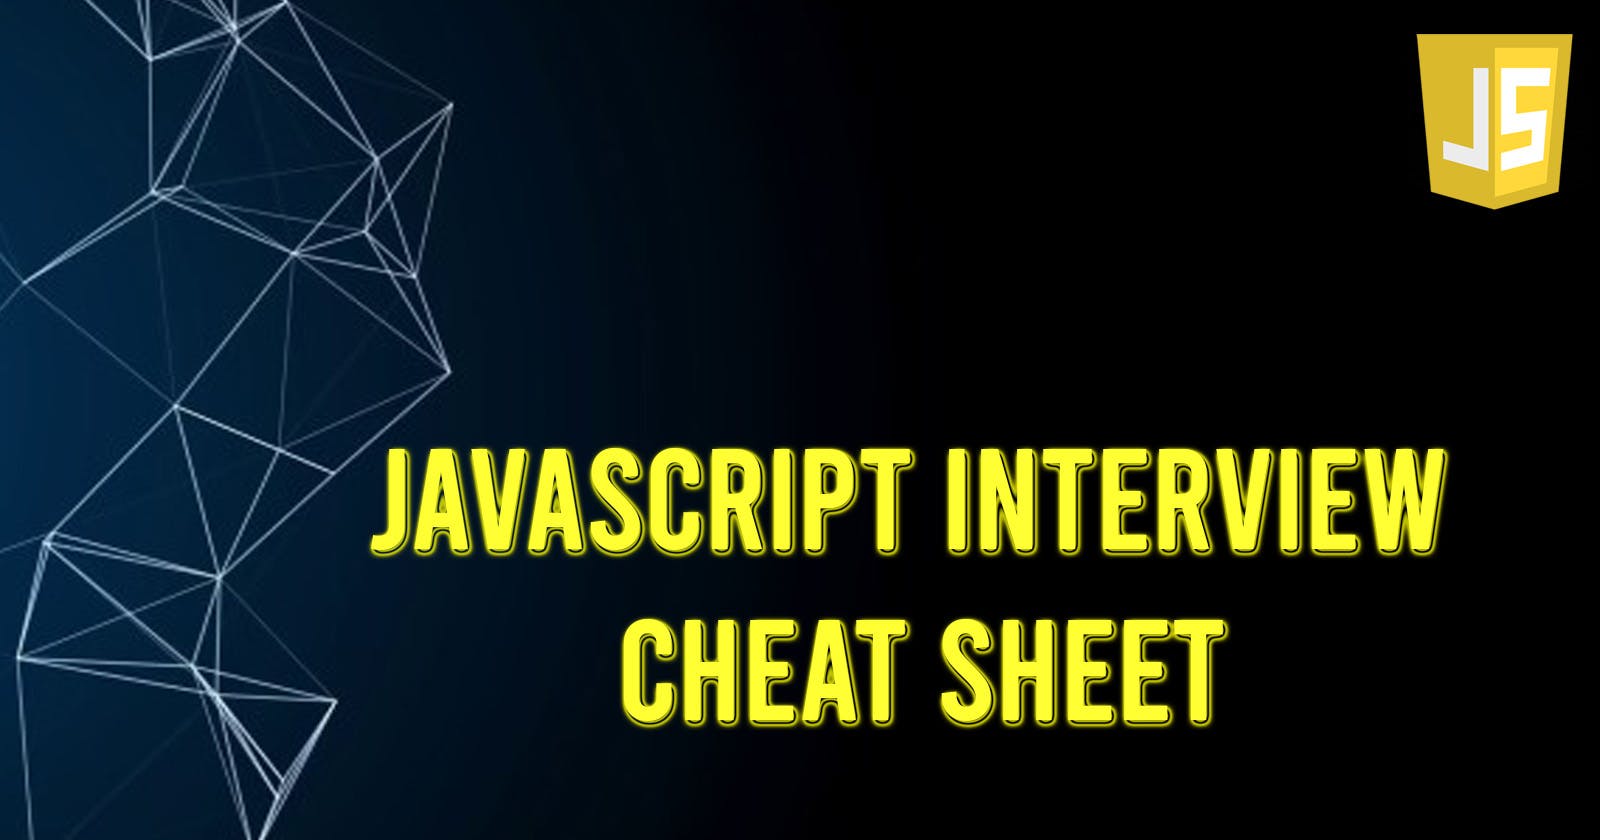 Javascript interview cheat sheet